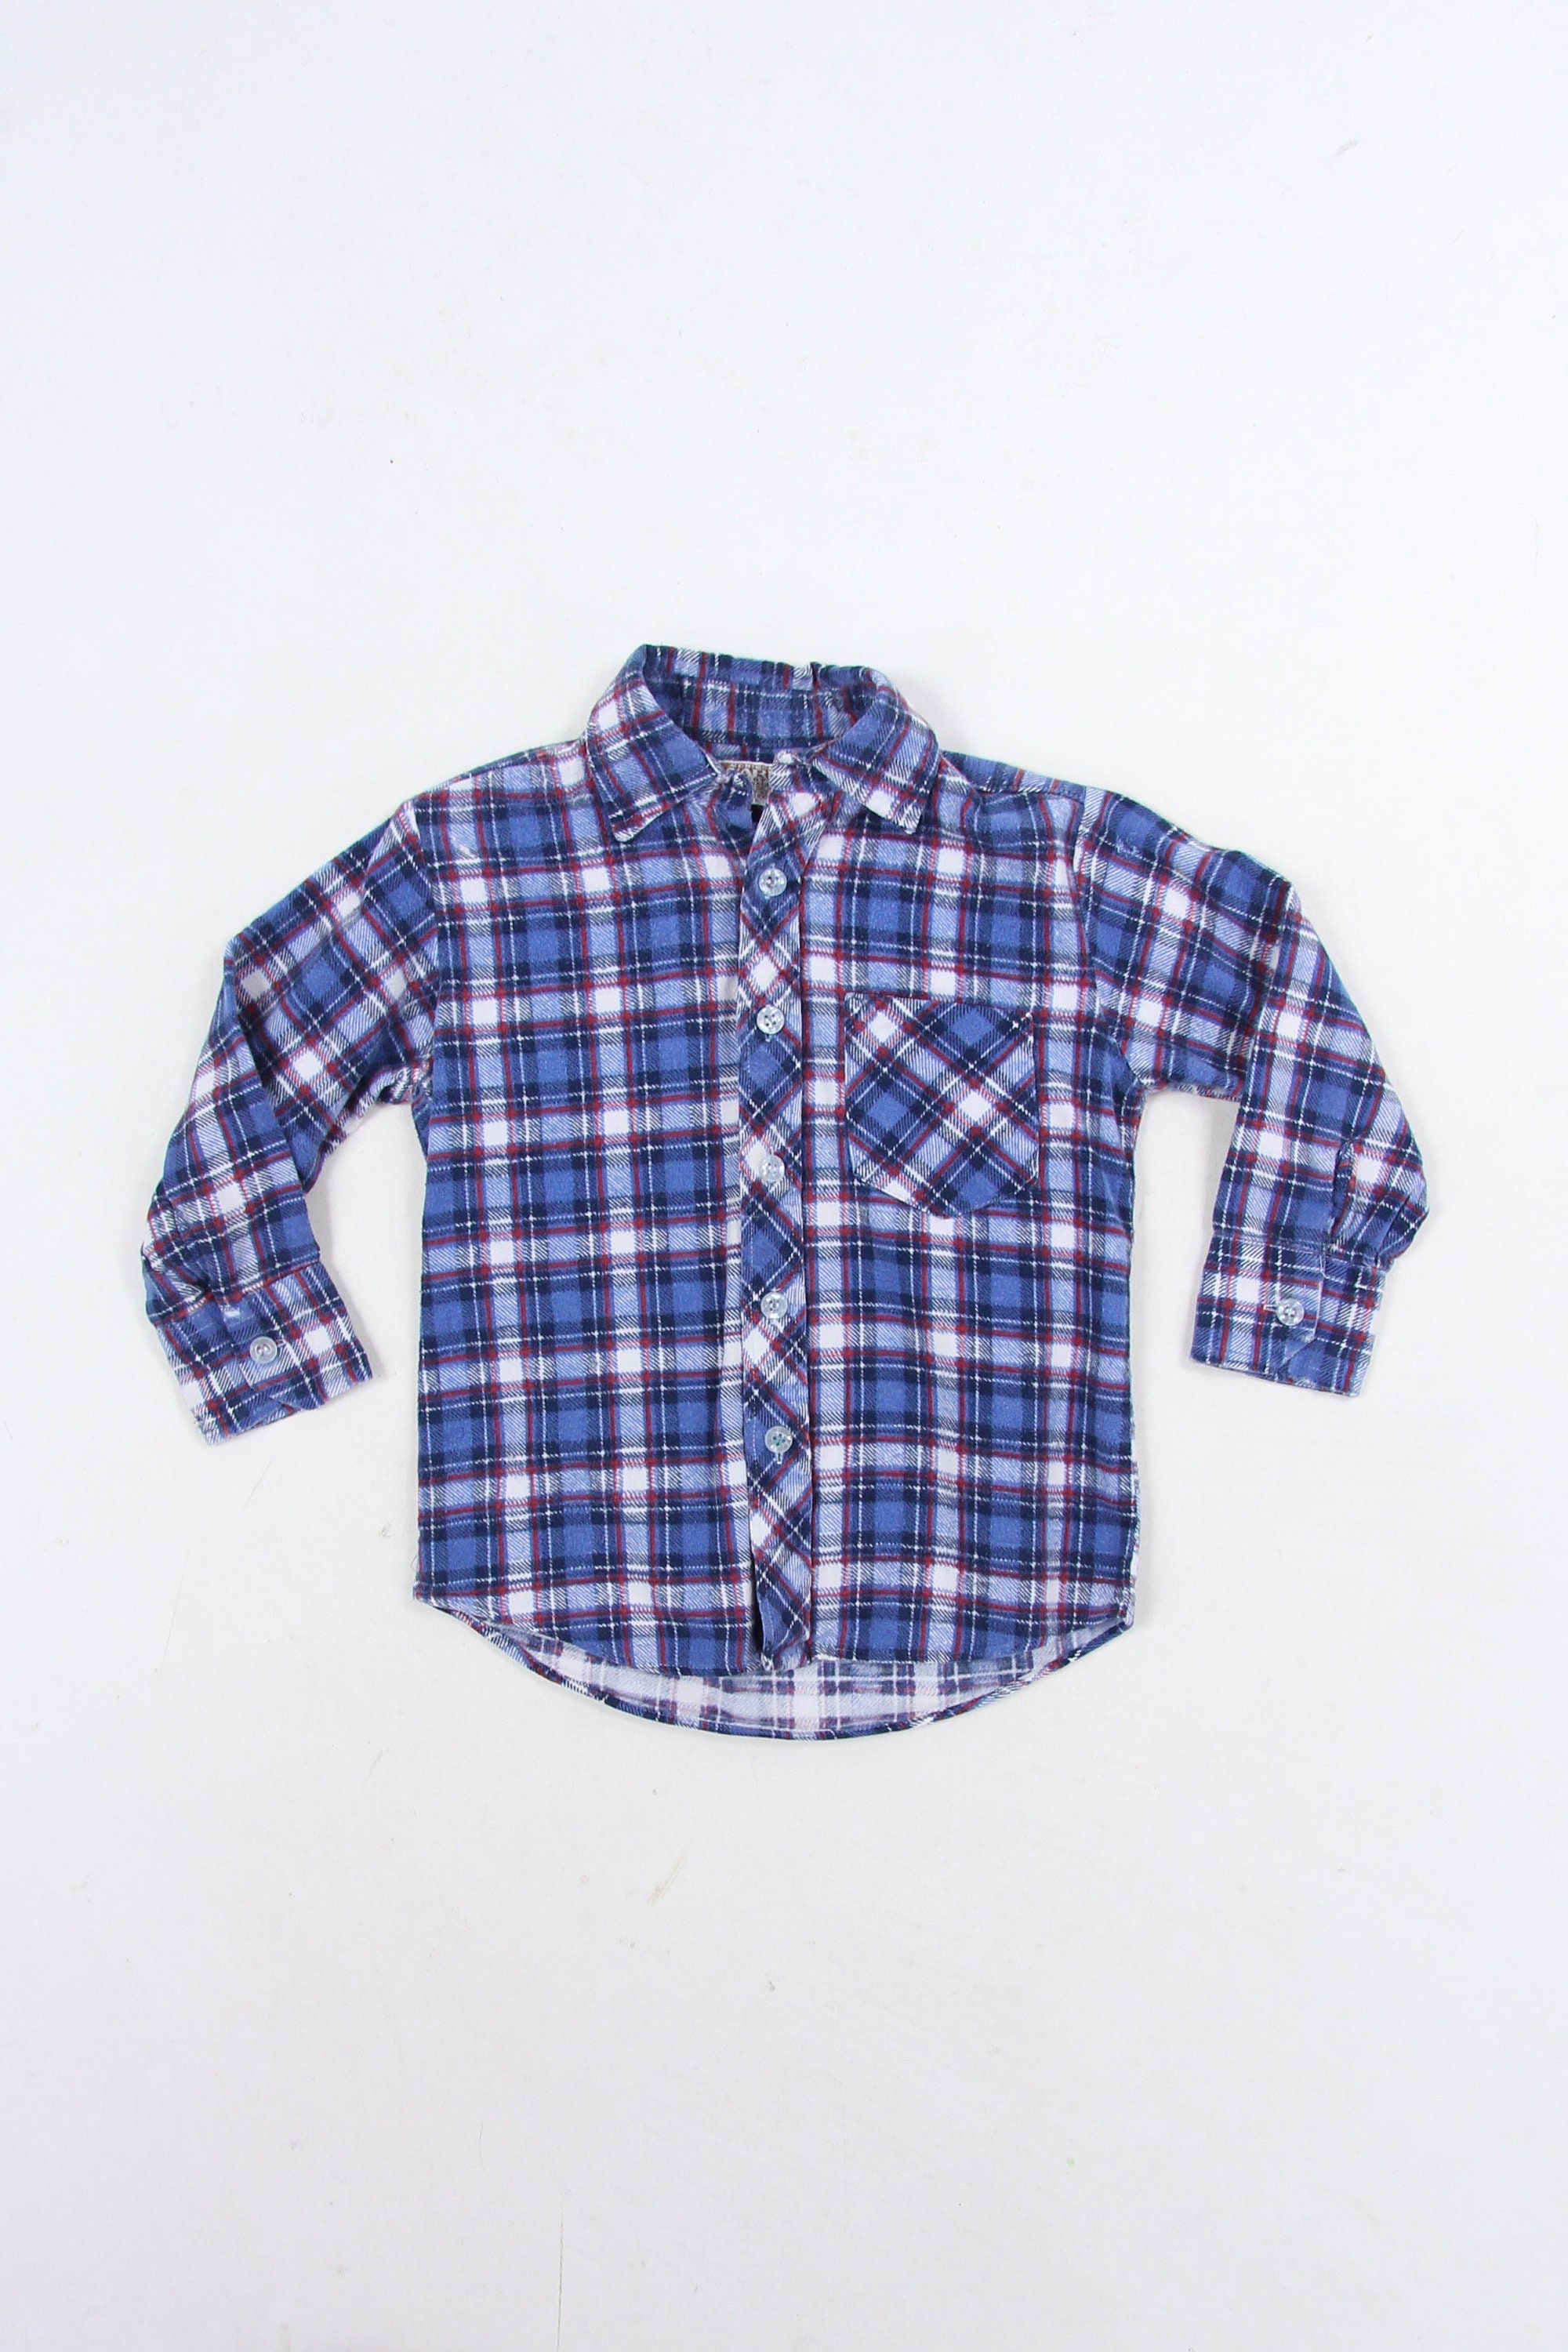 Kids Blue Flannel Montgomery Ward Plaid Vintage Button Down Shirt Size 4